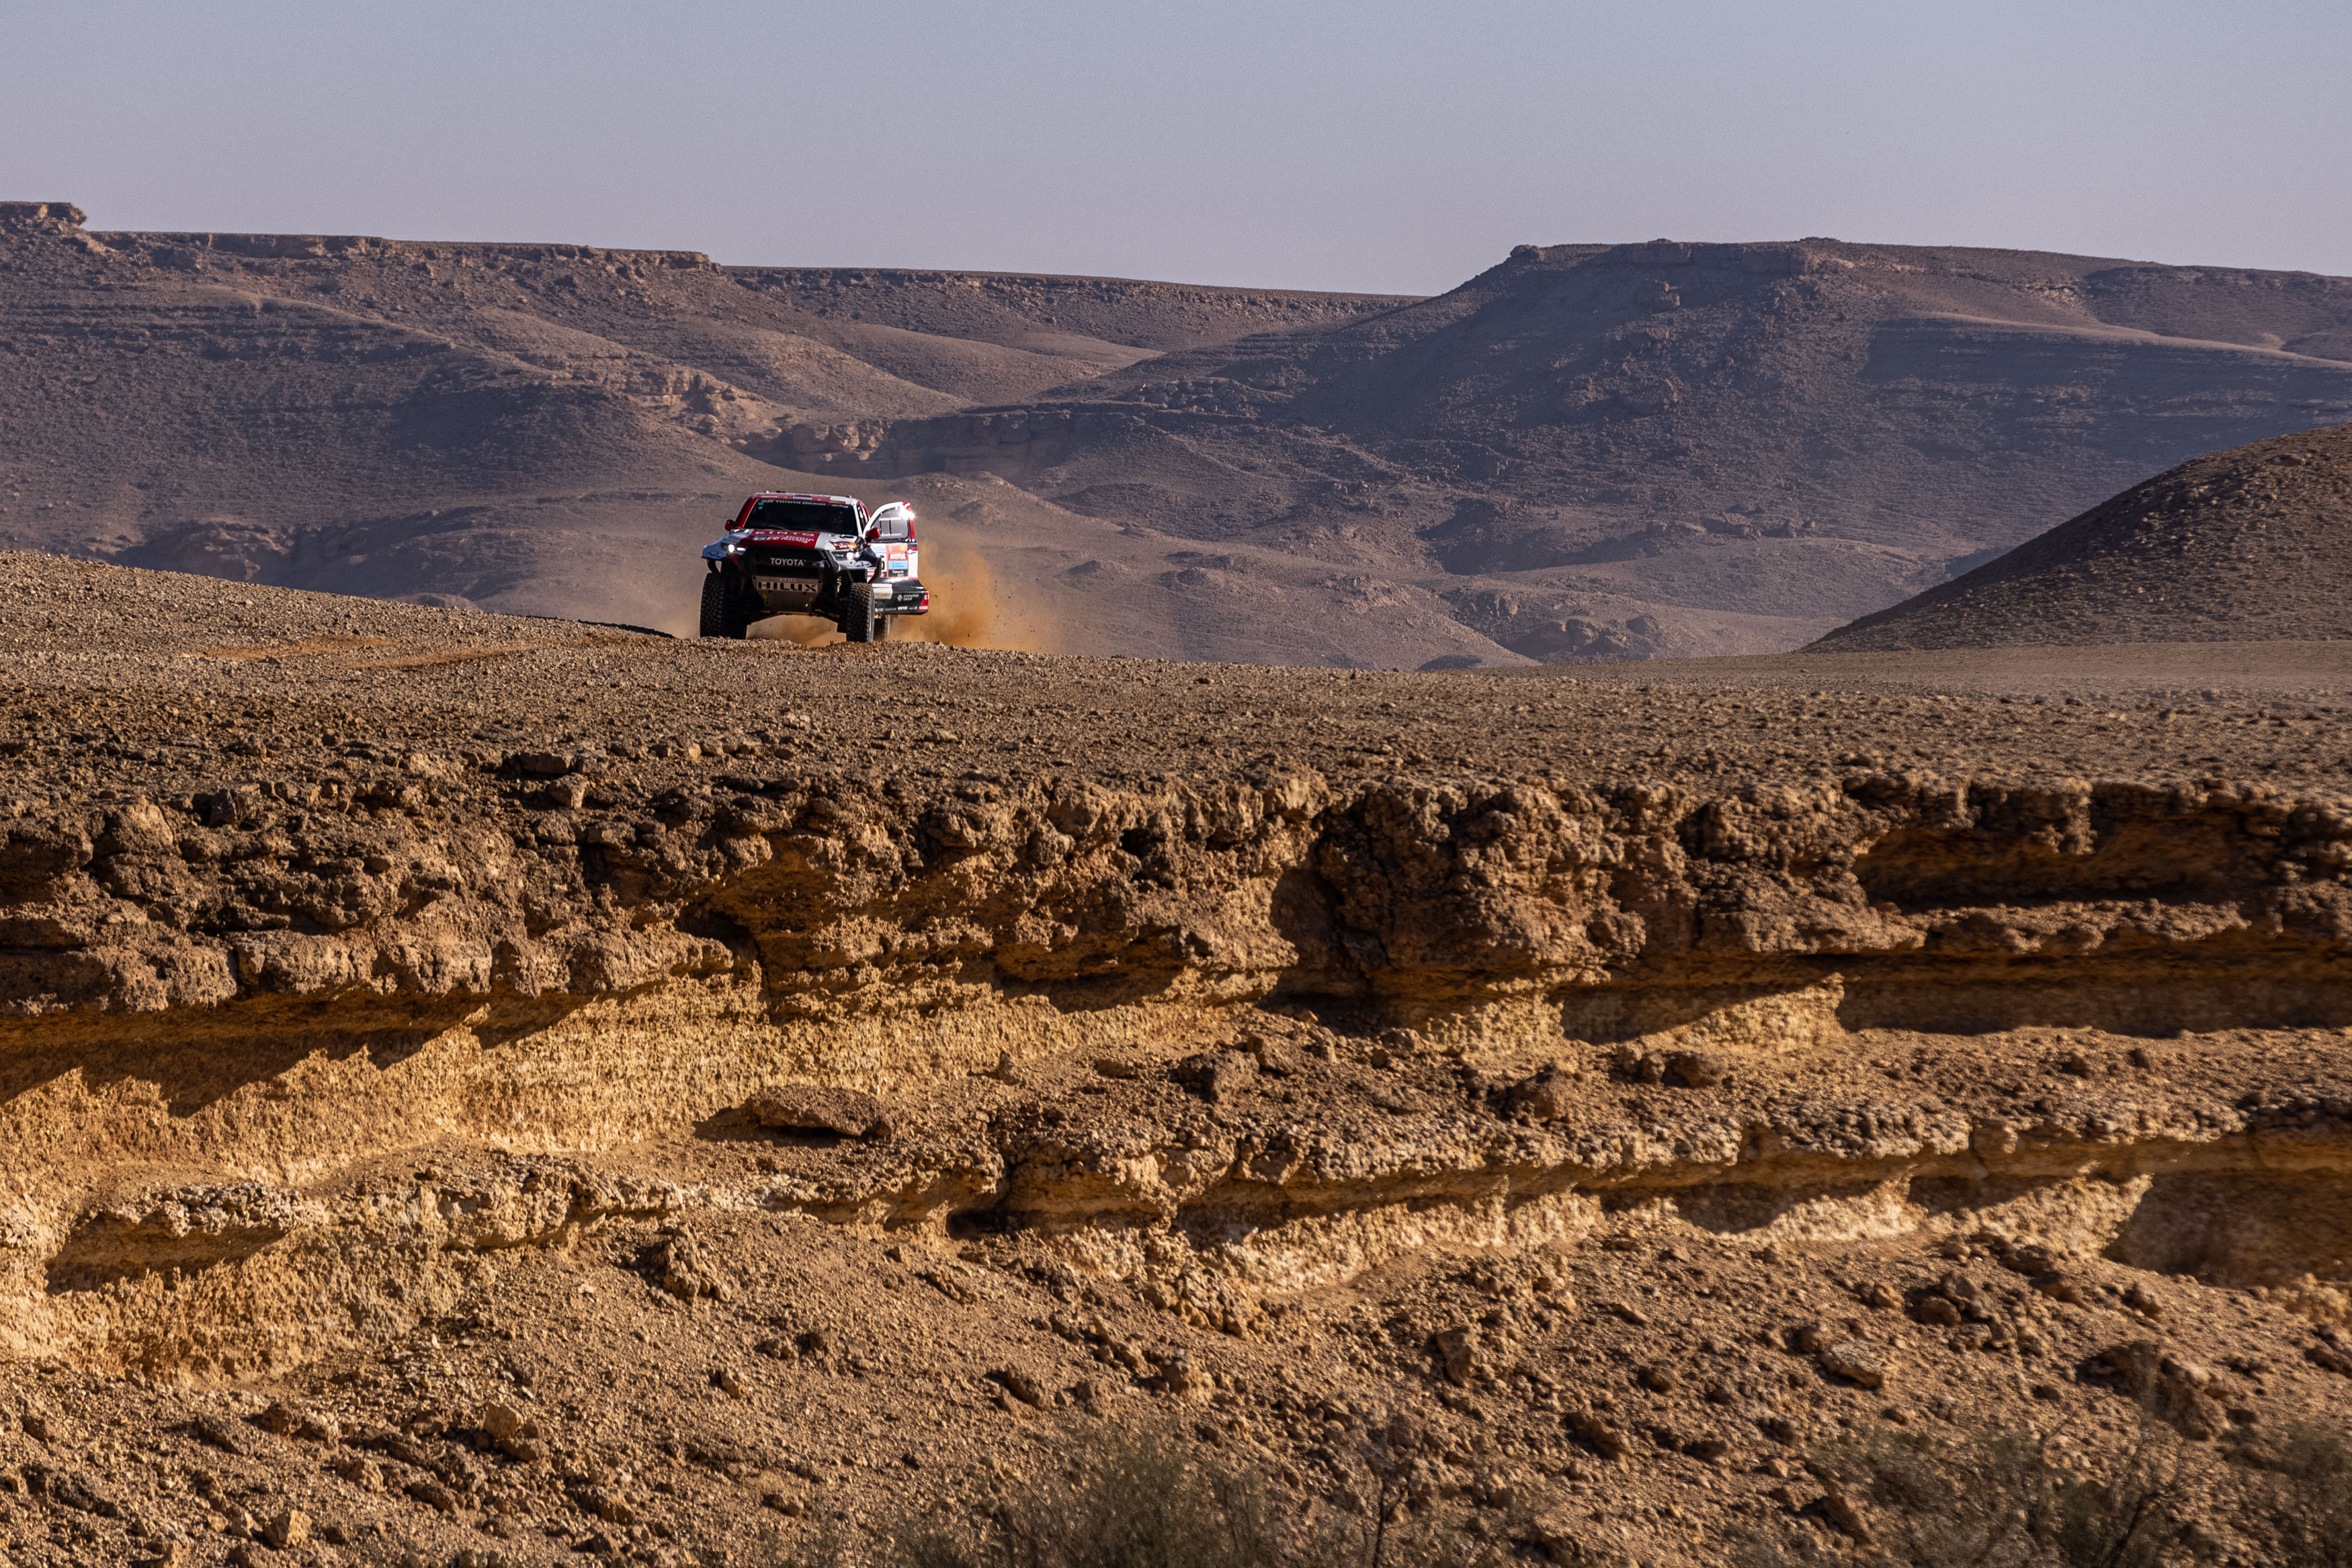 2022 44º Rallye Raid Dakar - Arabia Saudí [1-14 Enero] - Página 6 FIaRkCpWYAIdaot?format=jpg&name=4096x4096